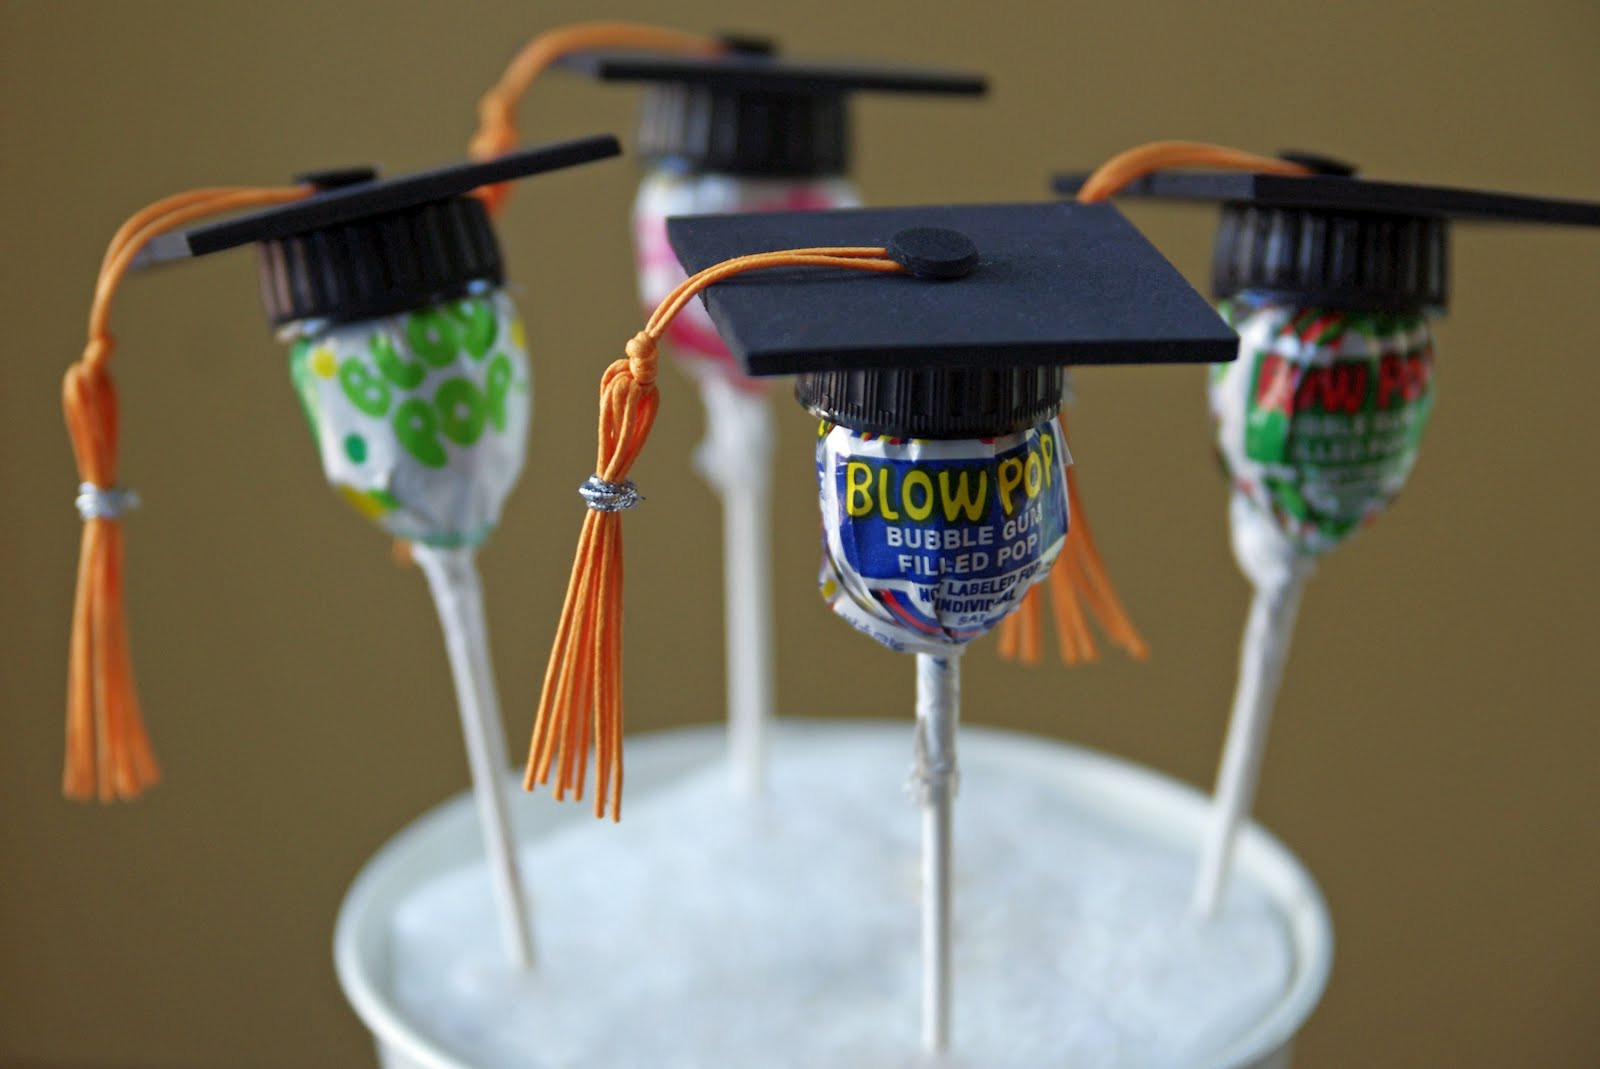 Graduation Favor Ideas For A Beach Party
 Life in Wonderland DIY Graduation Favors